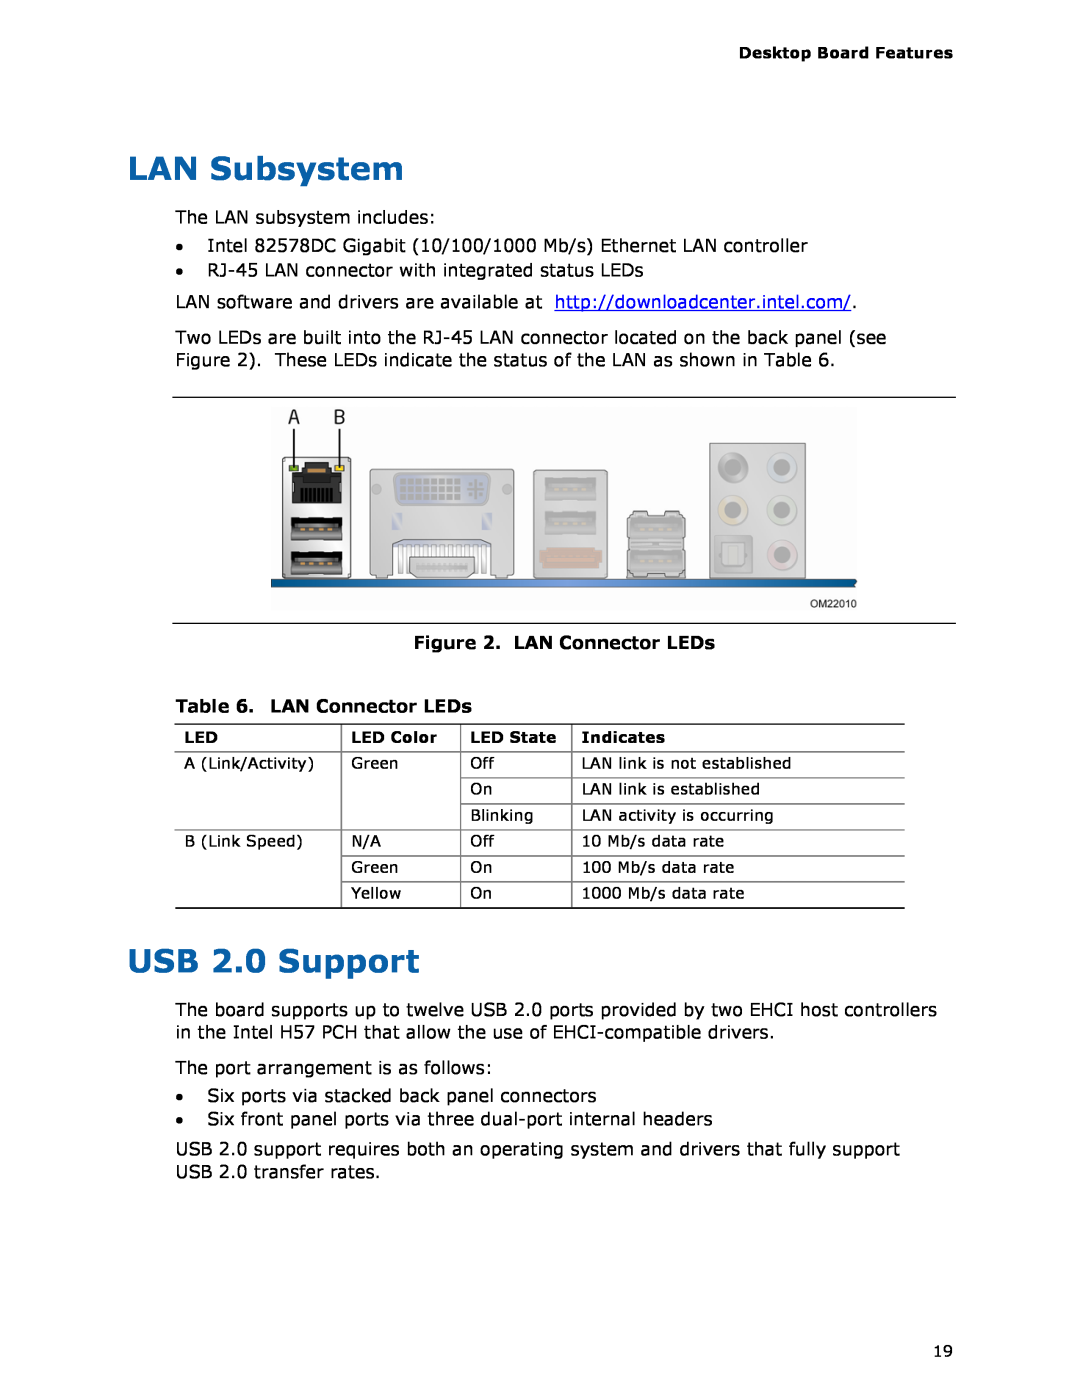 Intel BLKDH57JG manual LAN Subsystem, USB 2.0 Support, LAN Connector LEDs . LAN Connector LEDs 